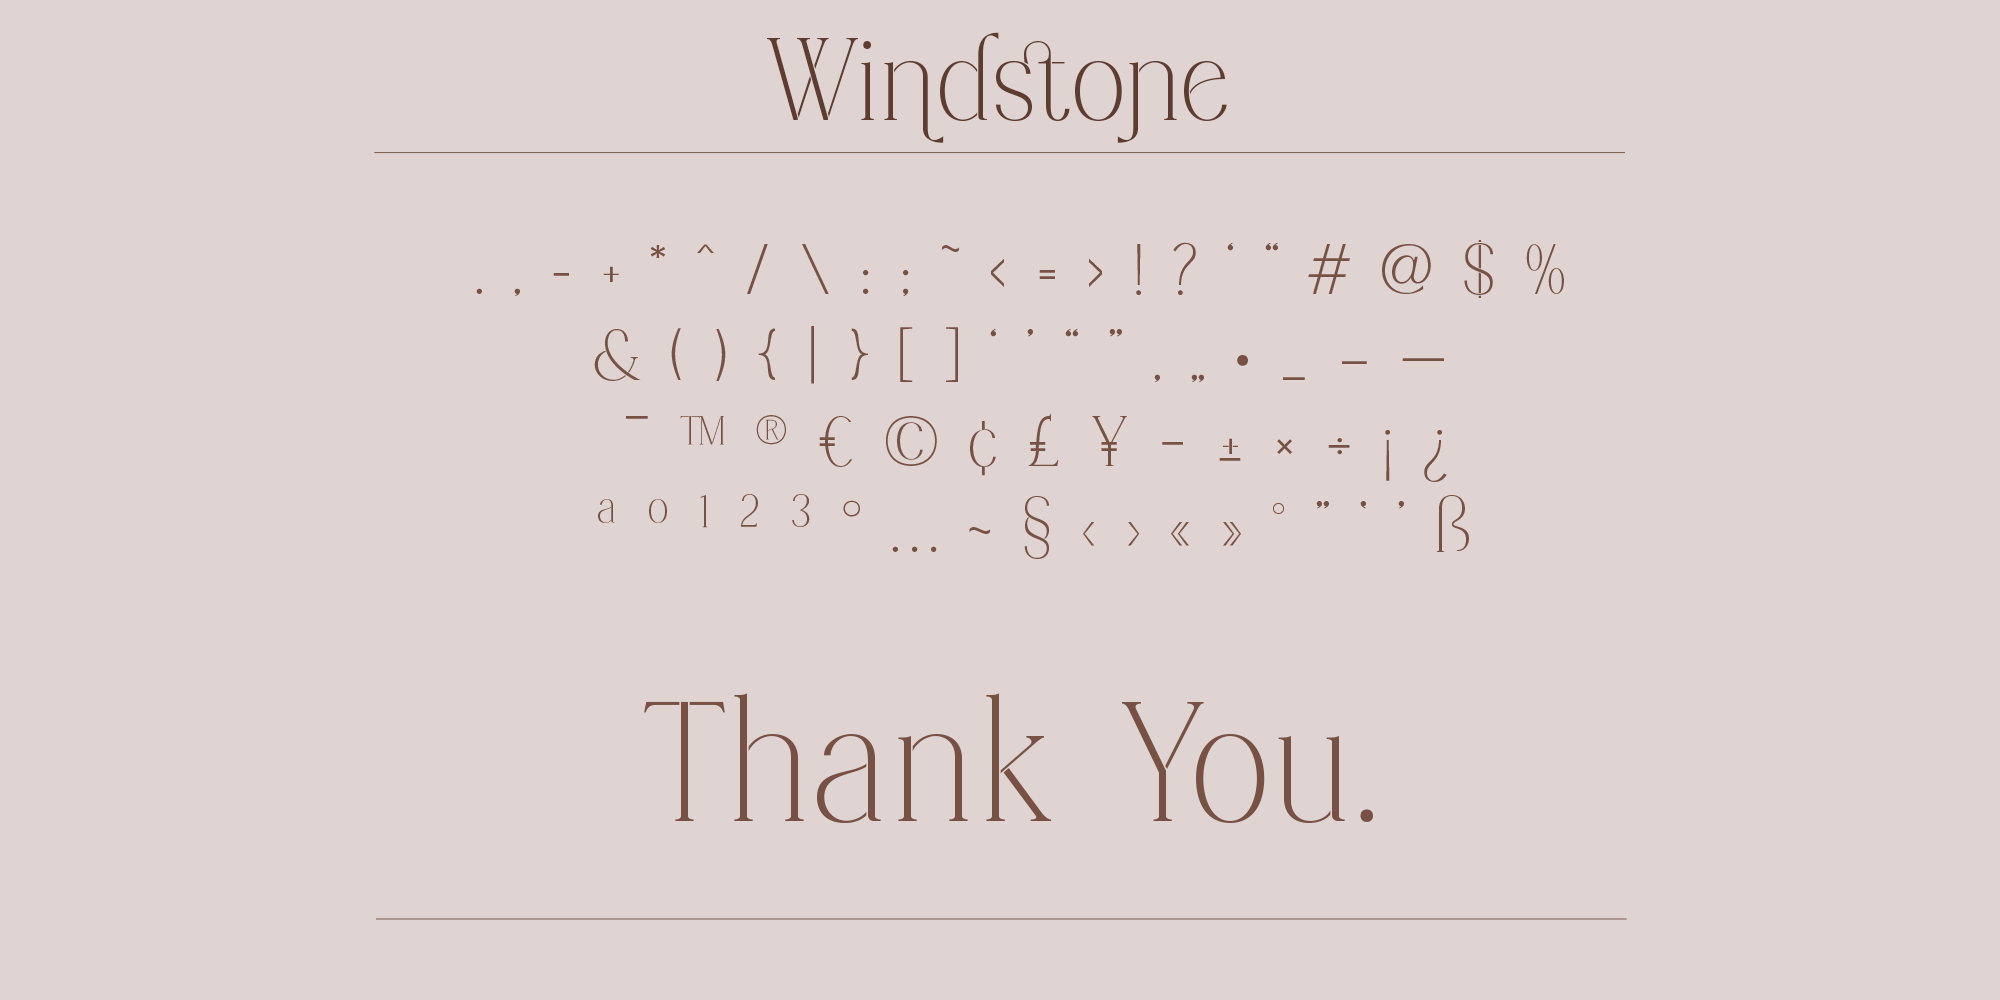 Windstone Serif PERSONAL USE